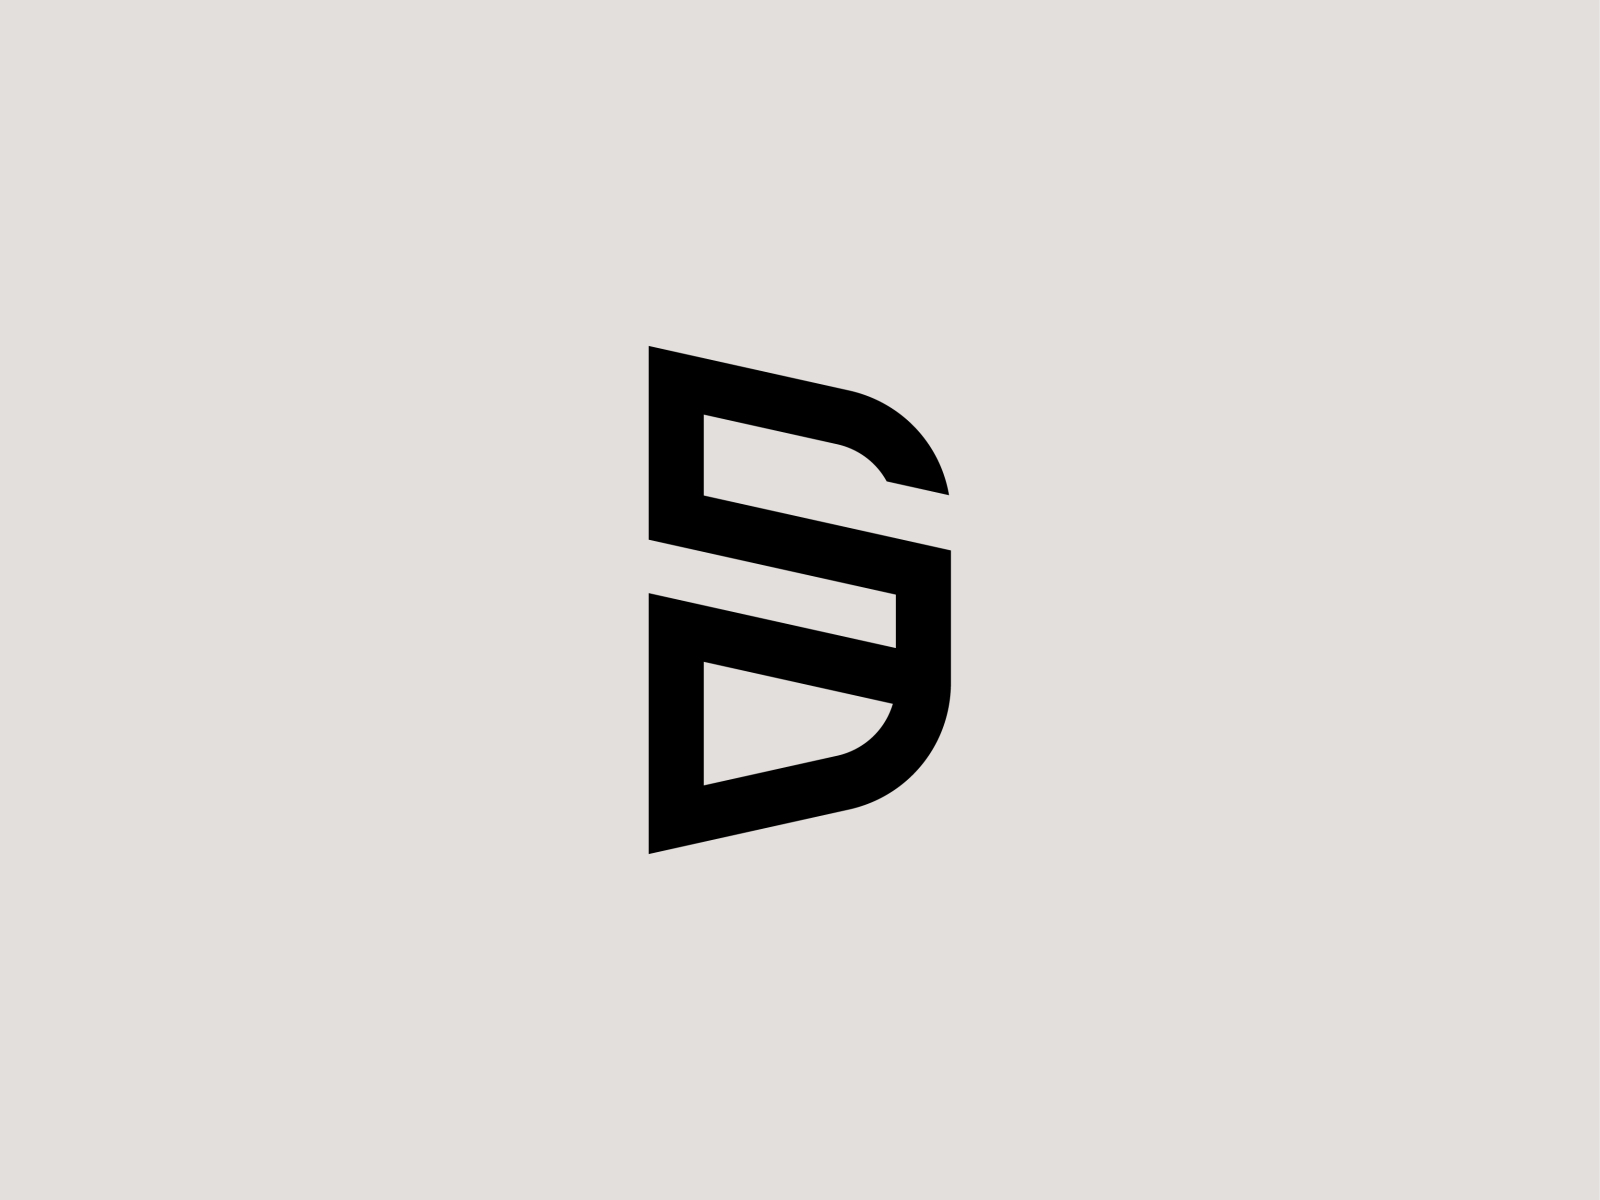 ds logo by Bojan Gulevski on Dribbble